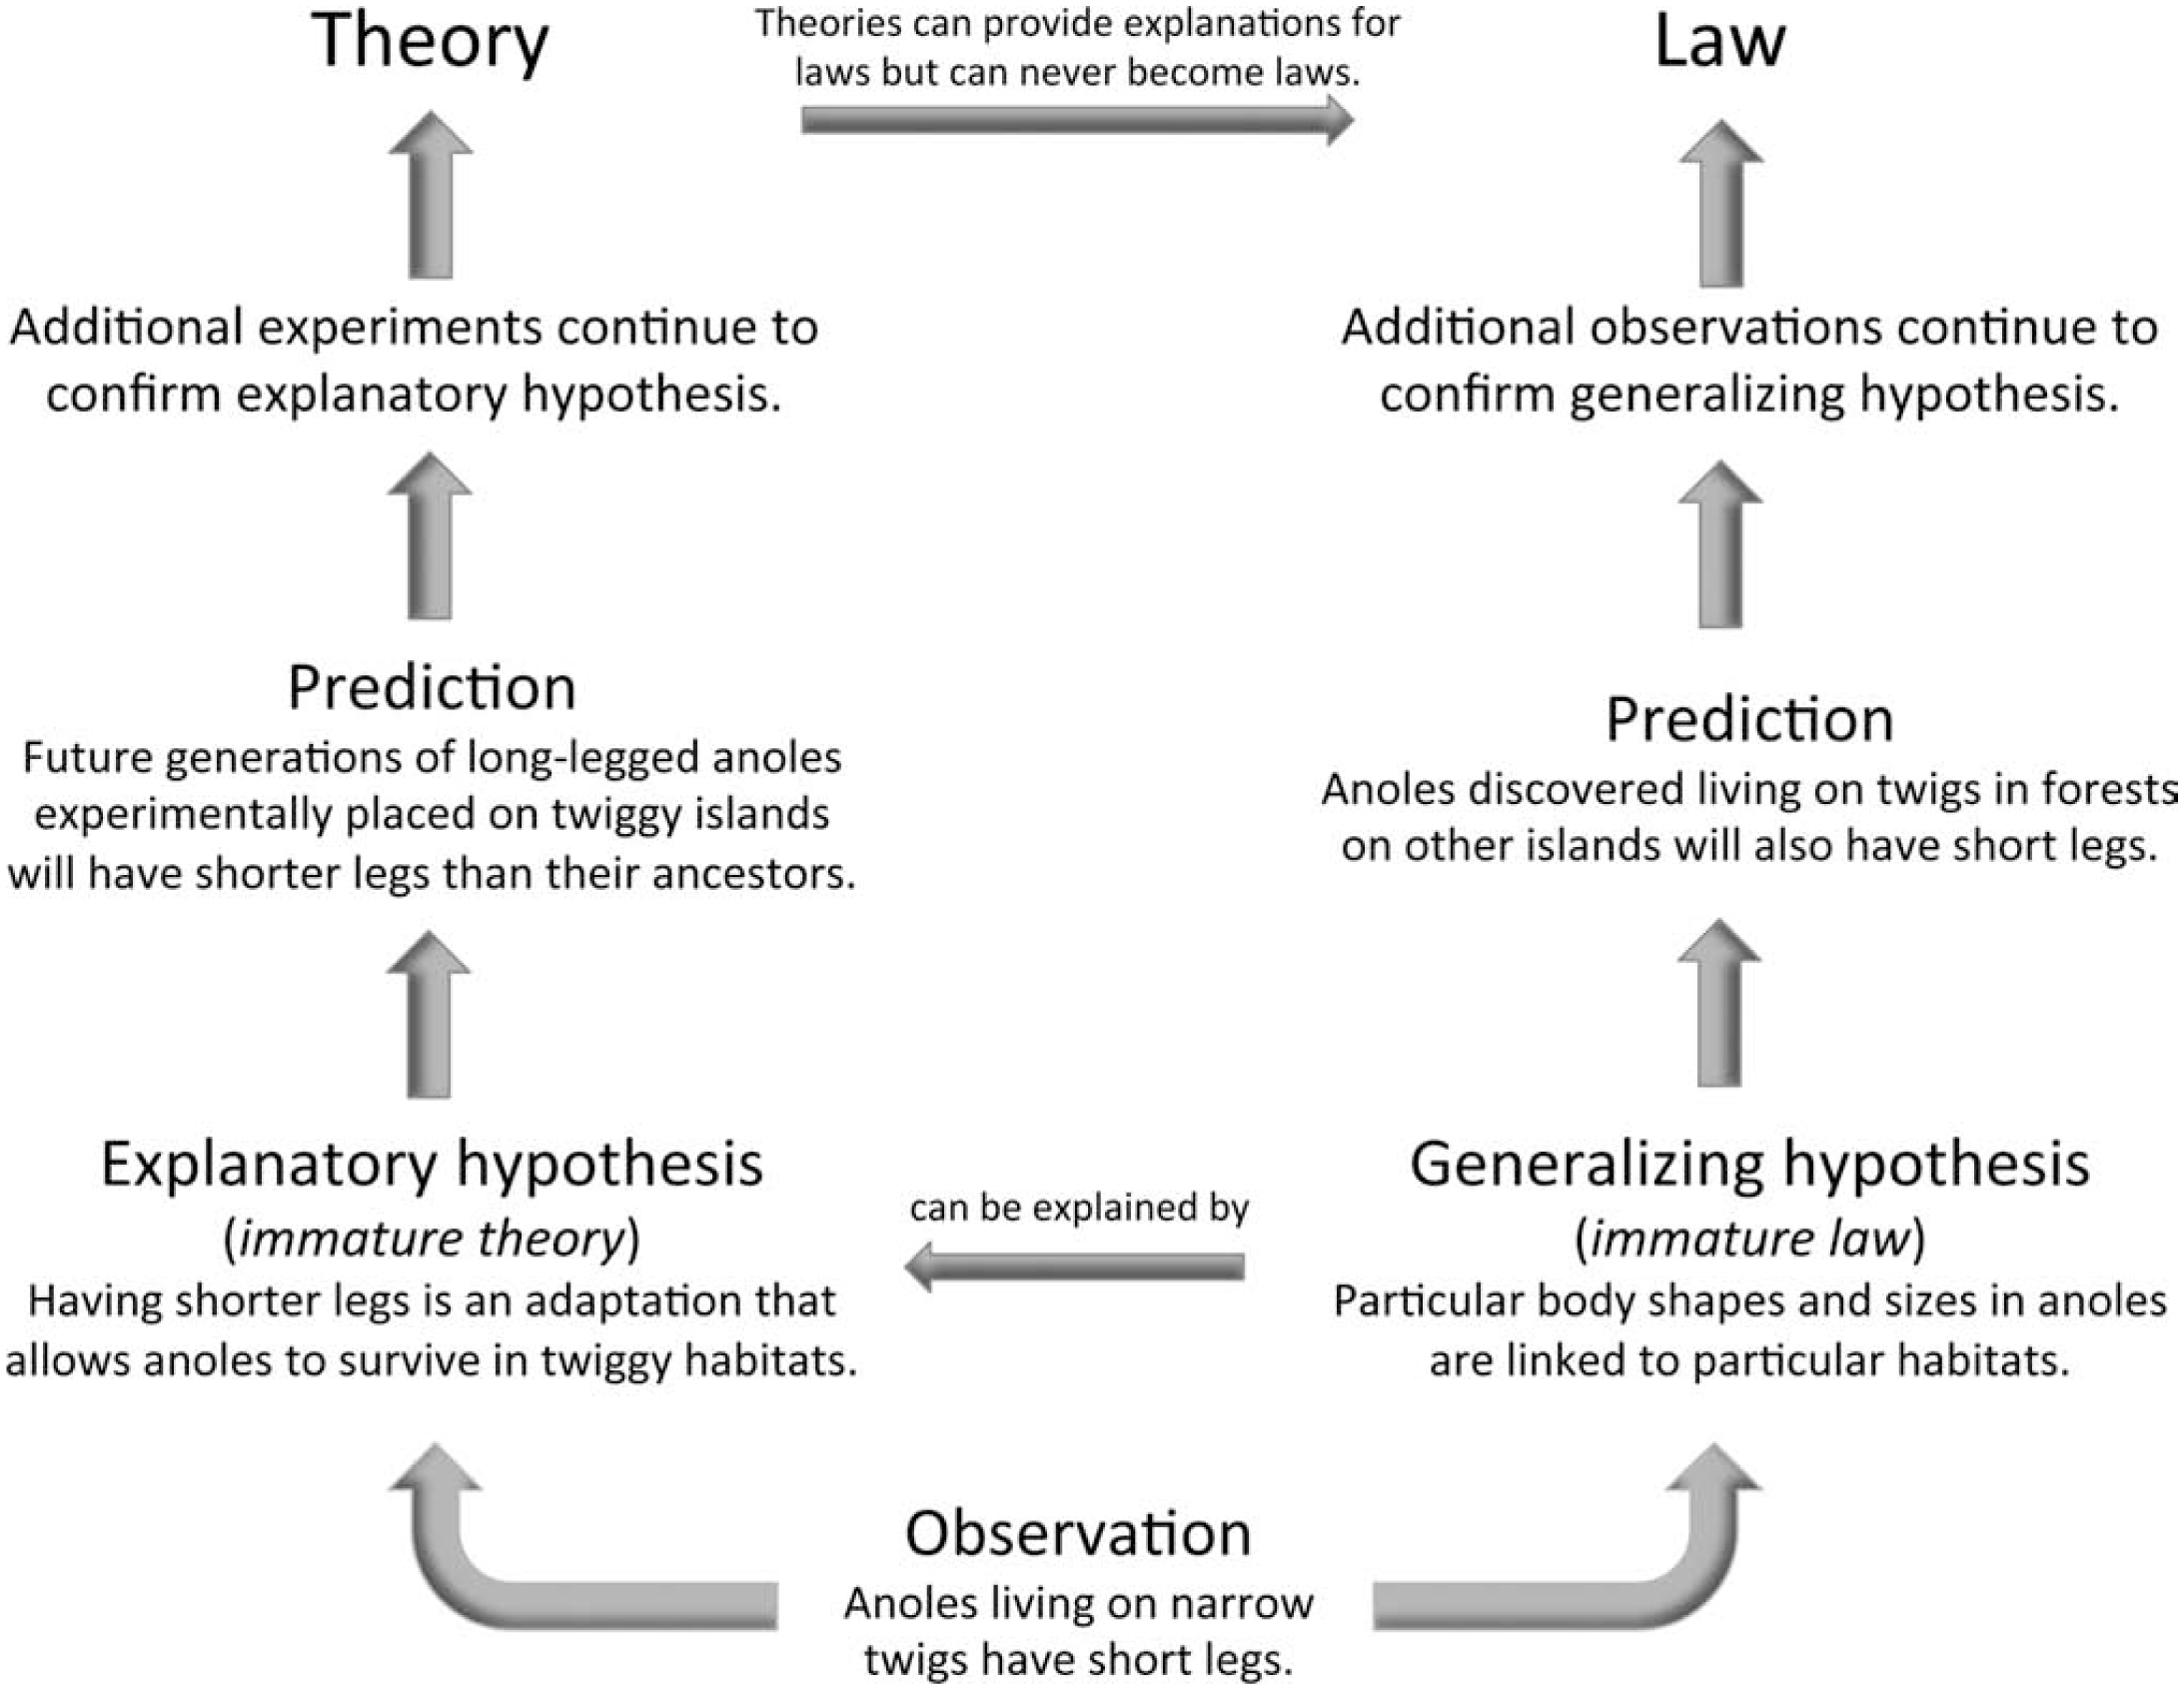 genomic hypothesis generation